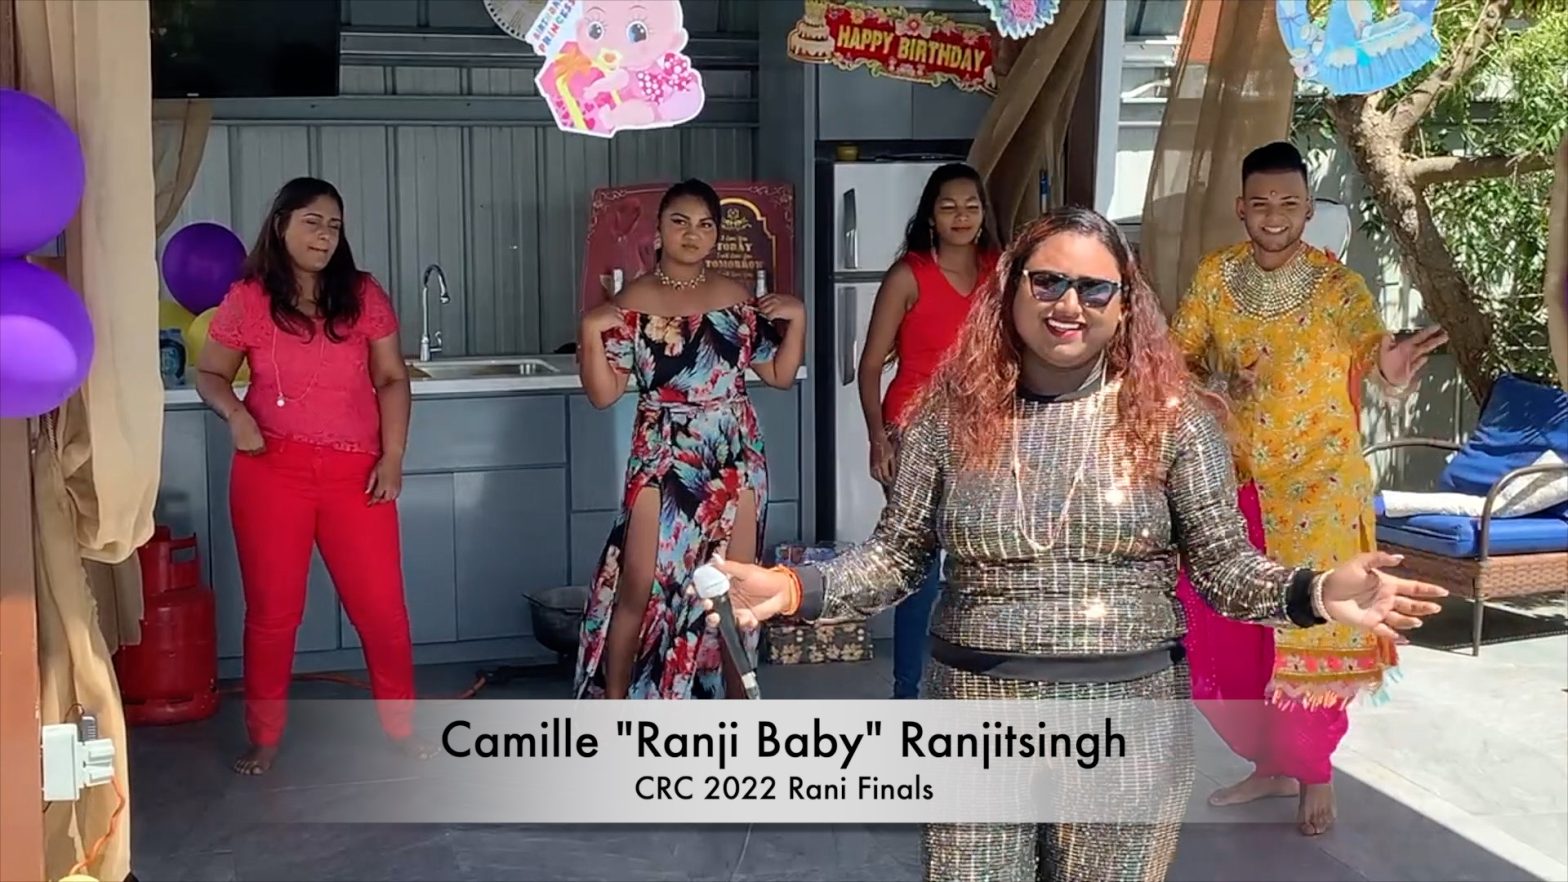 Camille “Ranji Baby” Ranjitsingh wins the Chutneymusic.com CRC 2022 Rani Title